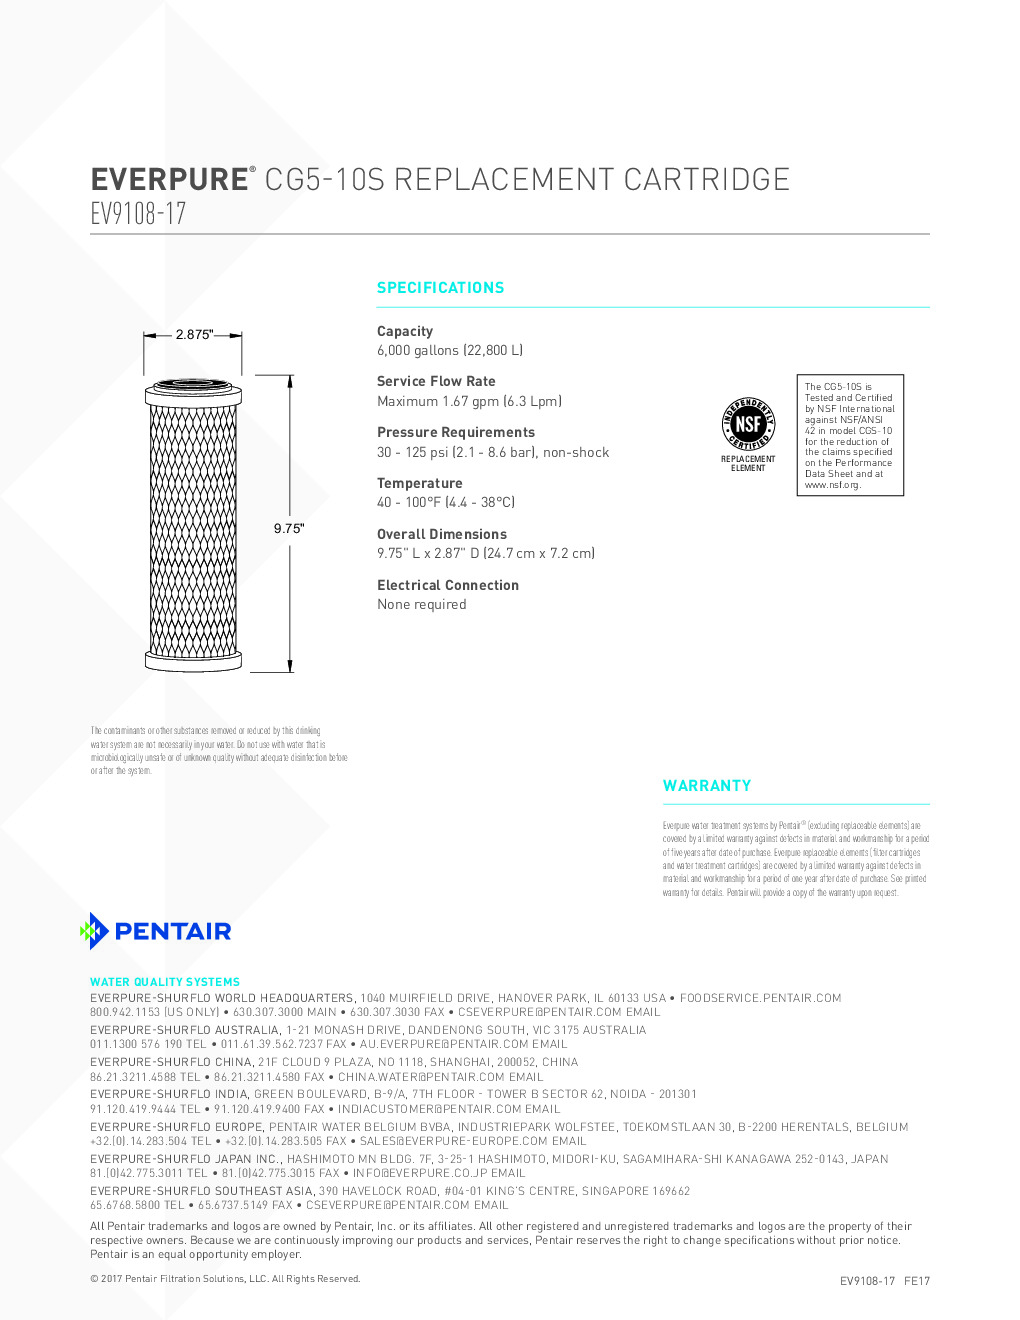 Everpure EV910817 Cartridge Water Filtration System